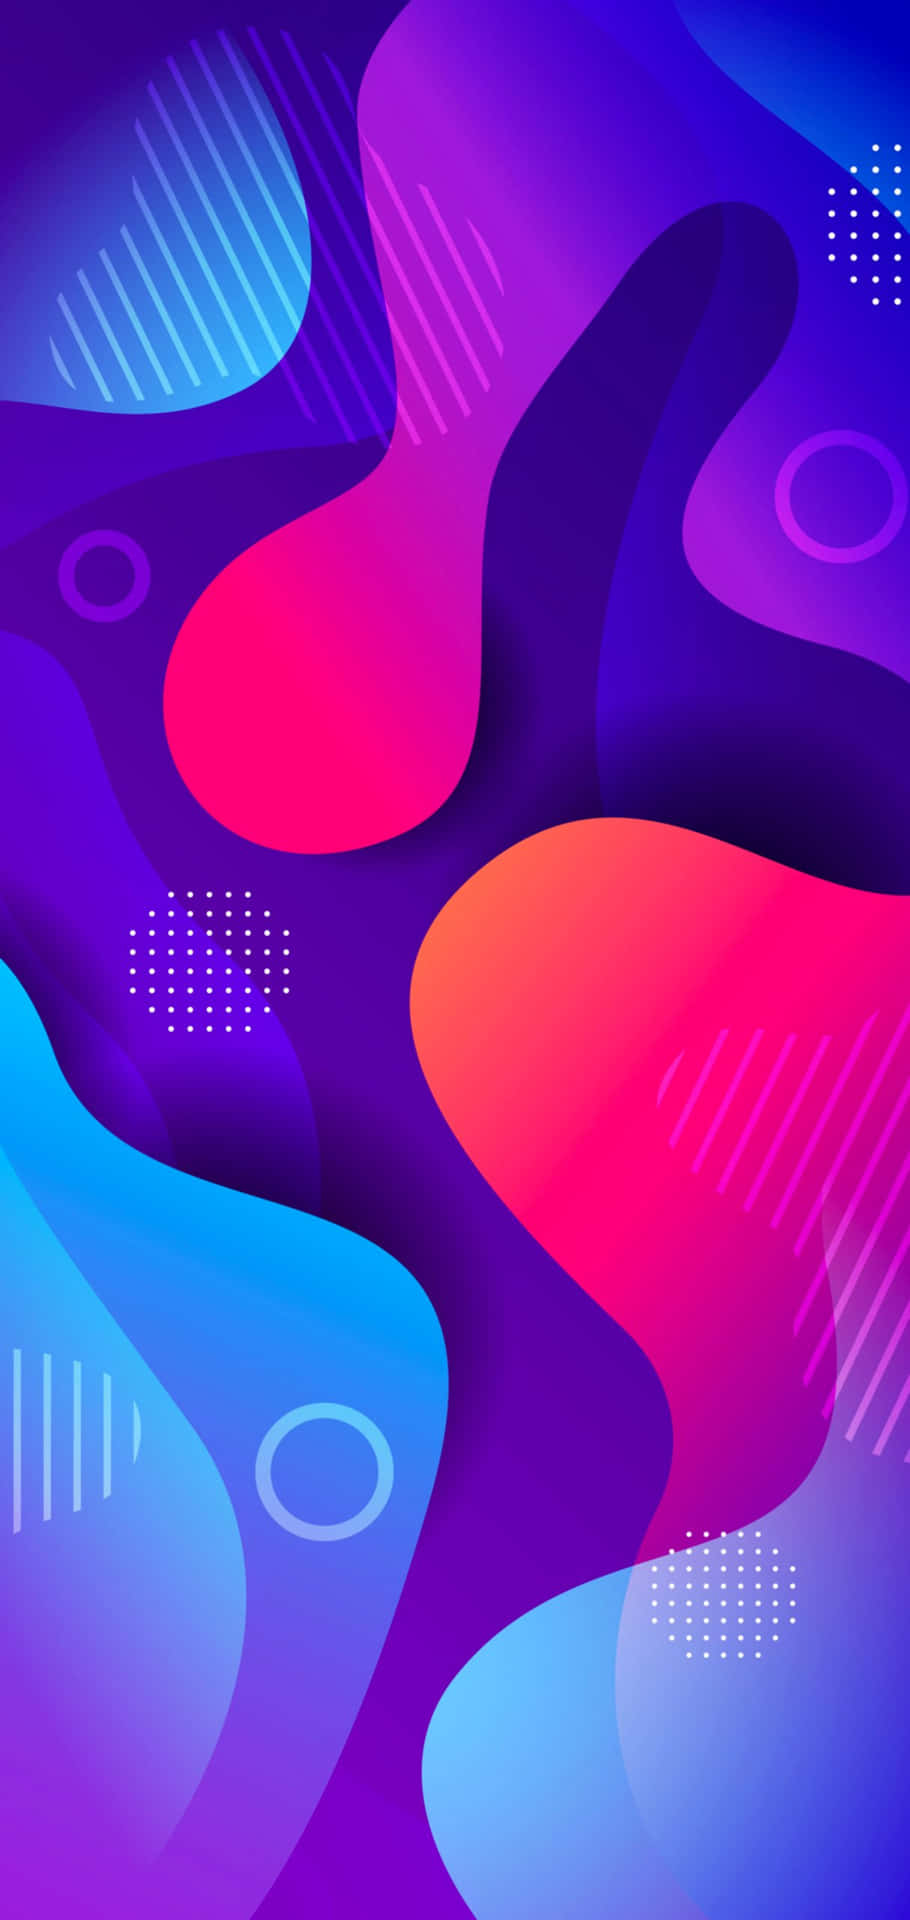 Beautifully Designed Colorful Iphone Background